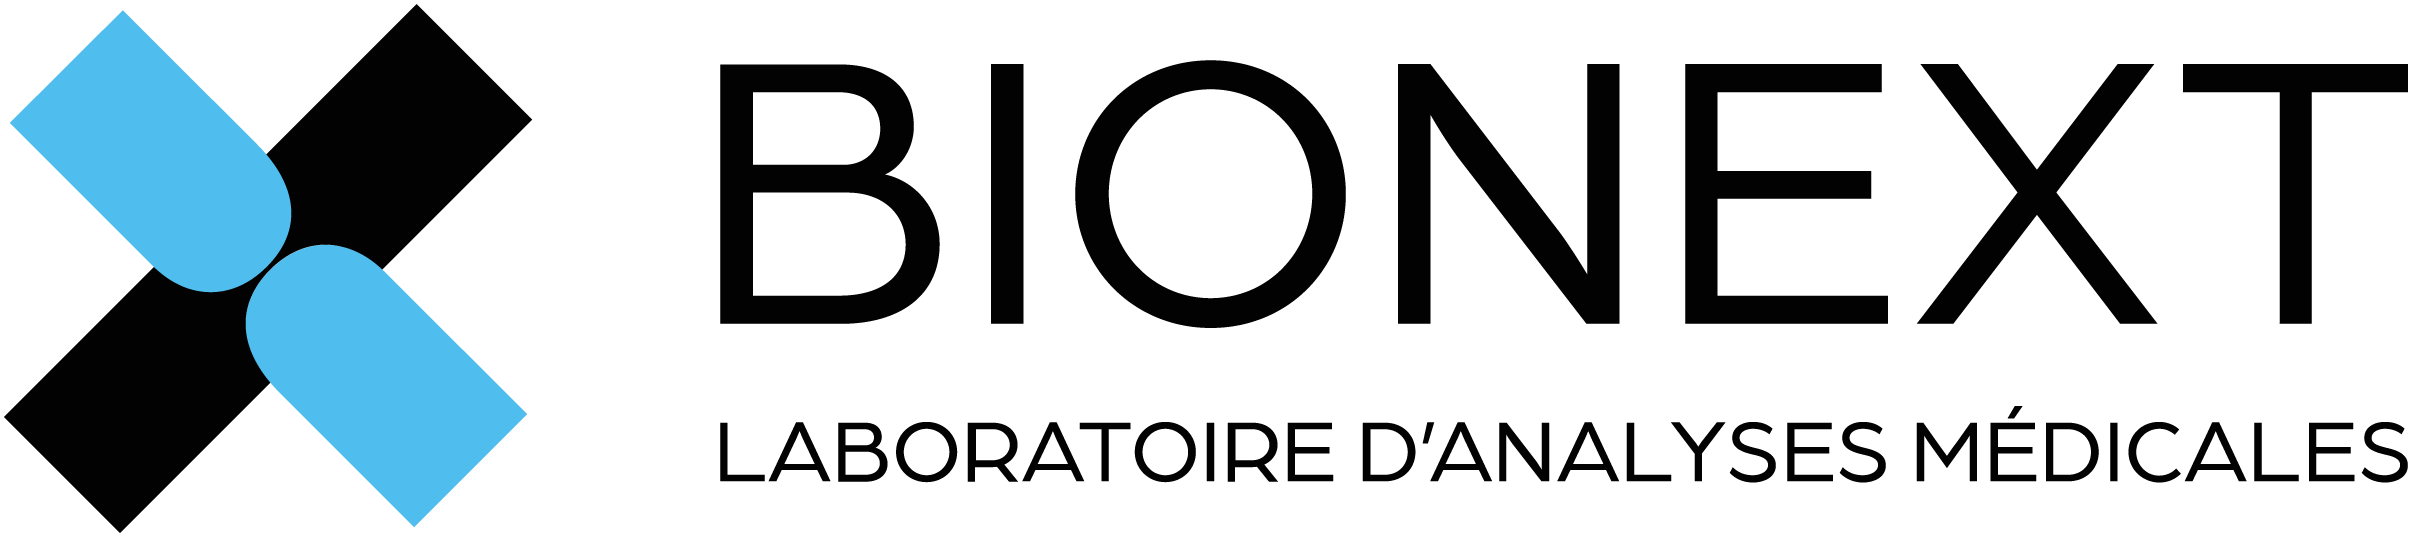 Logo Bionext